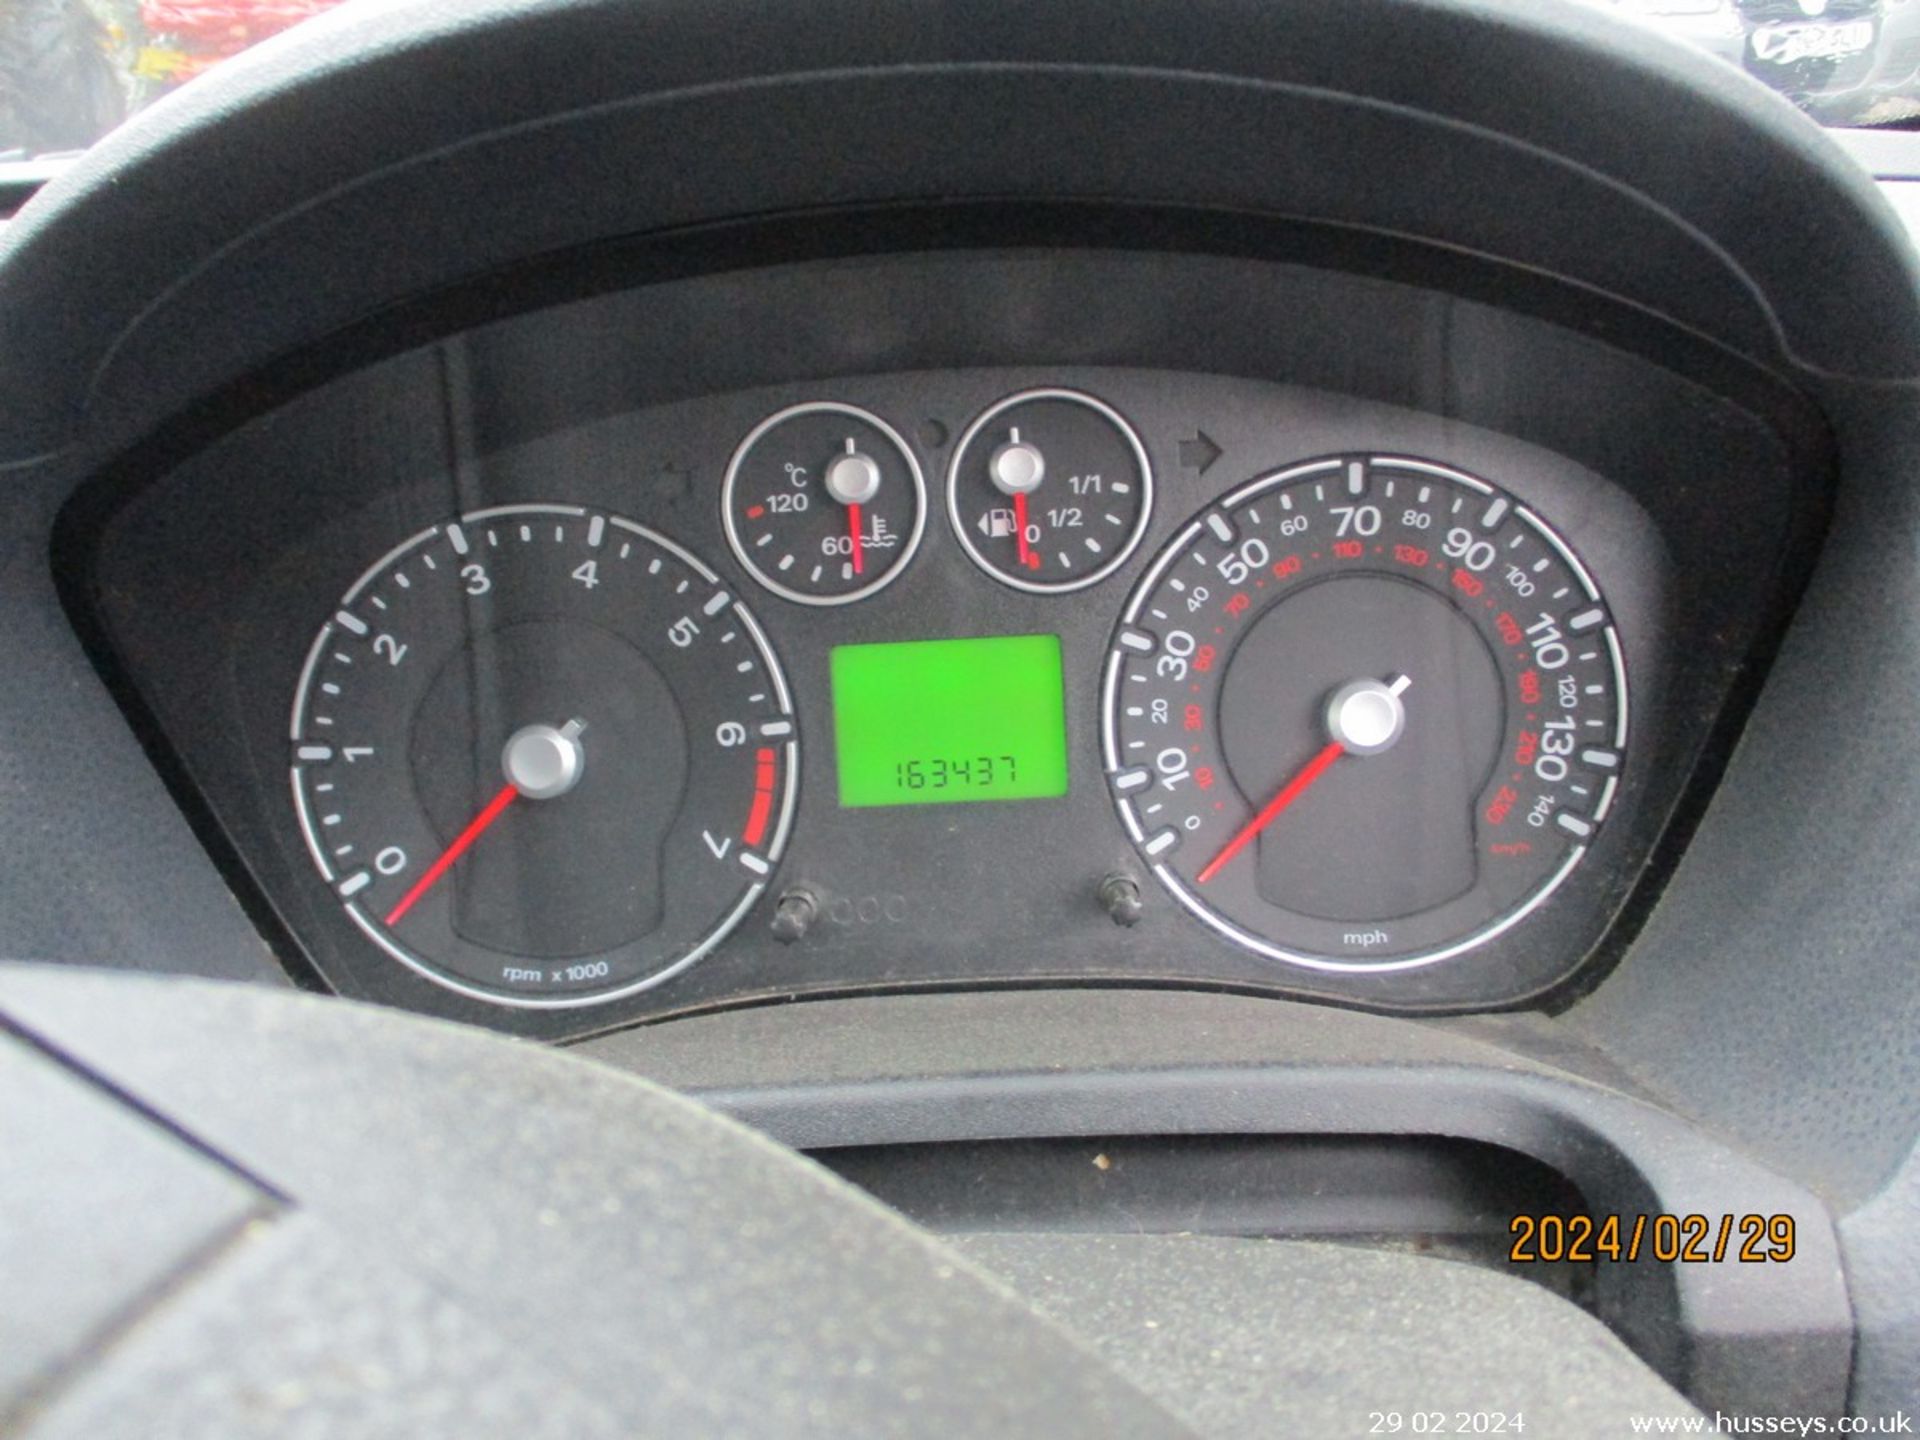 08/58 FORD FIESTA STYLE CLIMATE - 1242cc 3dr Hatchback (Black, 163k) - Image 10 of 12